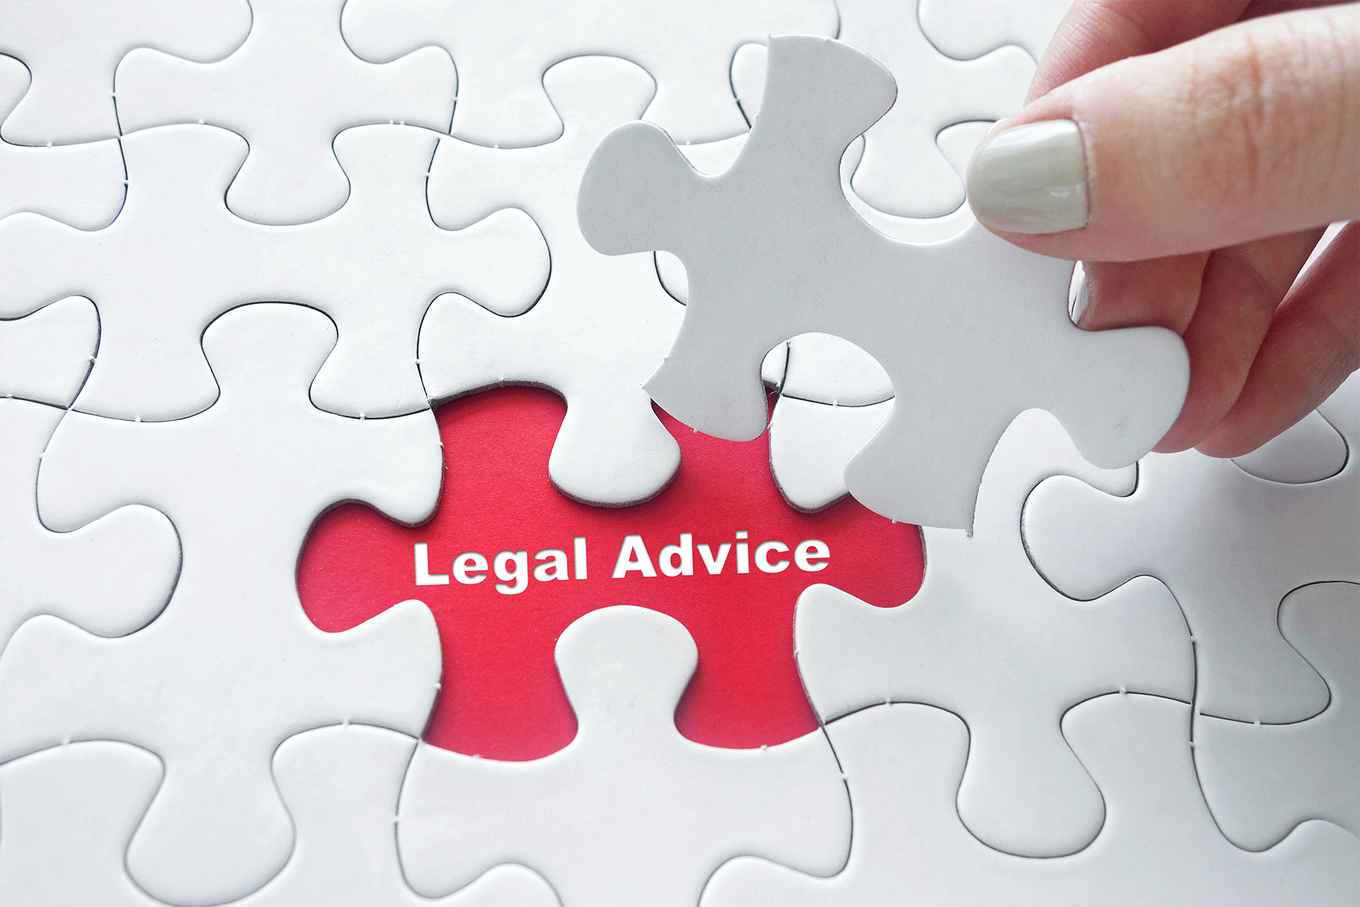 Free legal advice